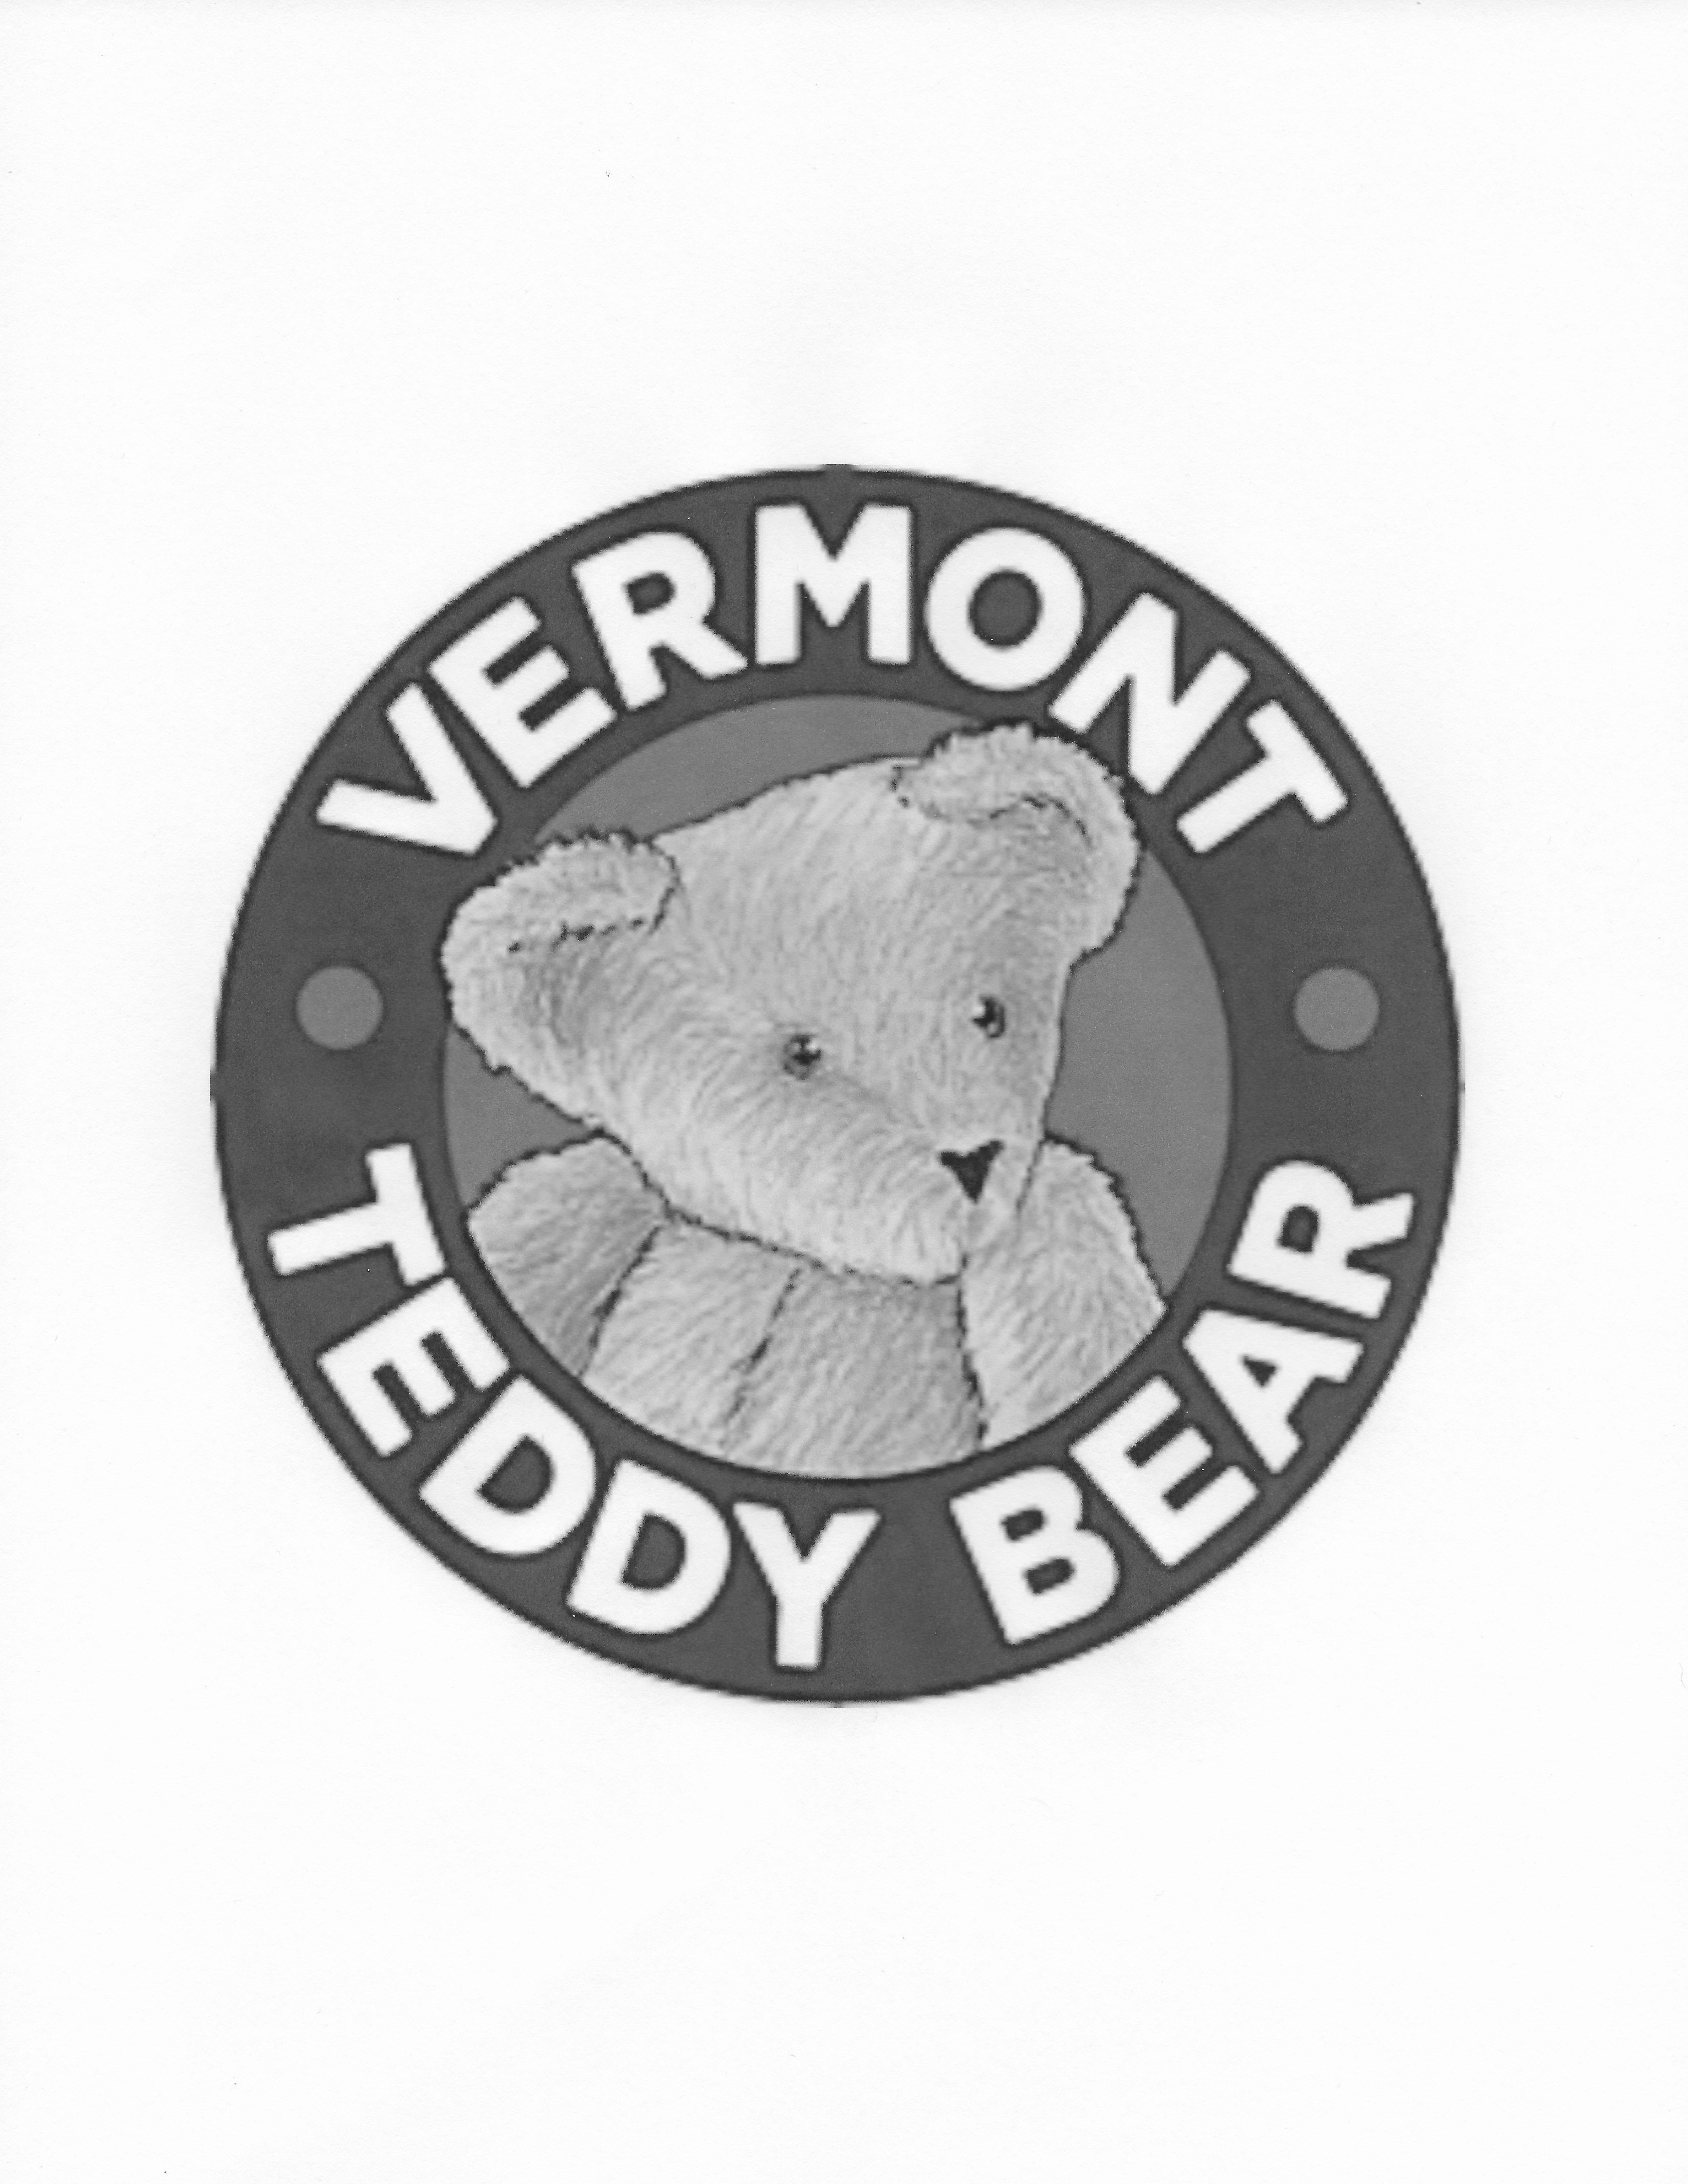  · VERMONT Â· TEDDY BEAR